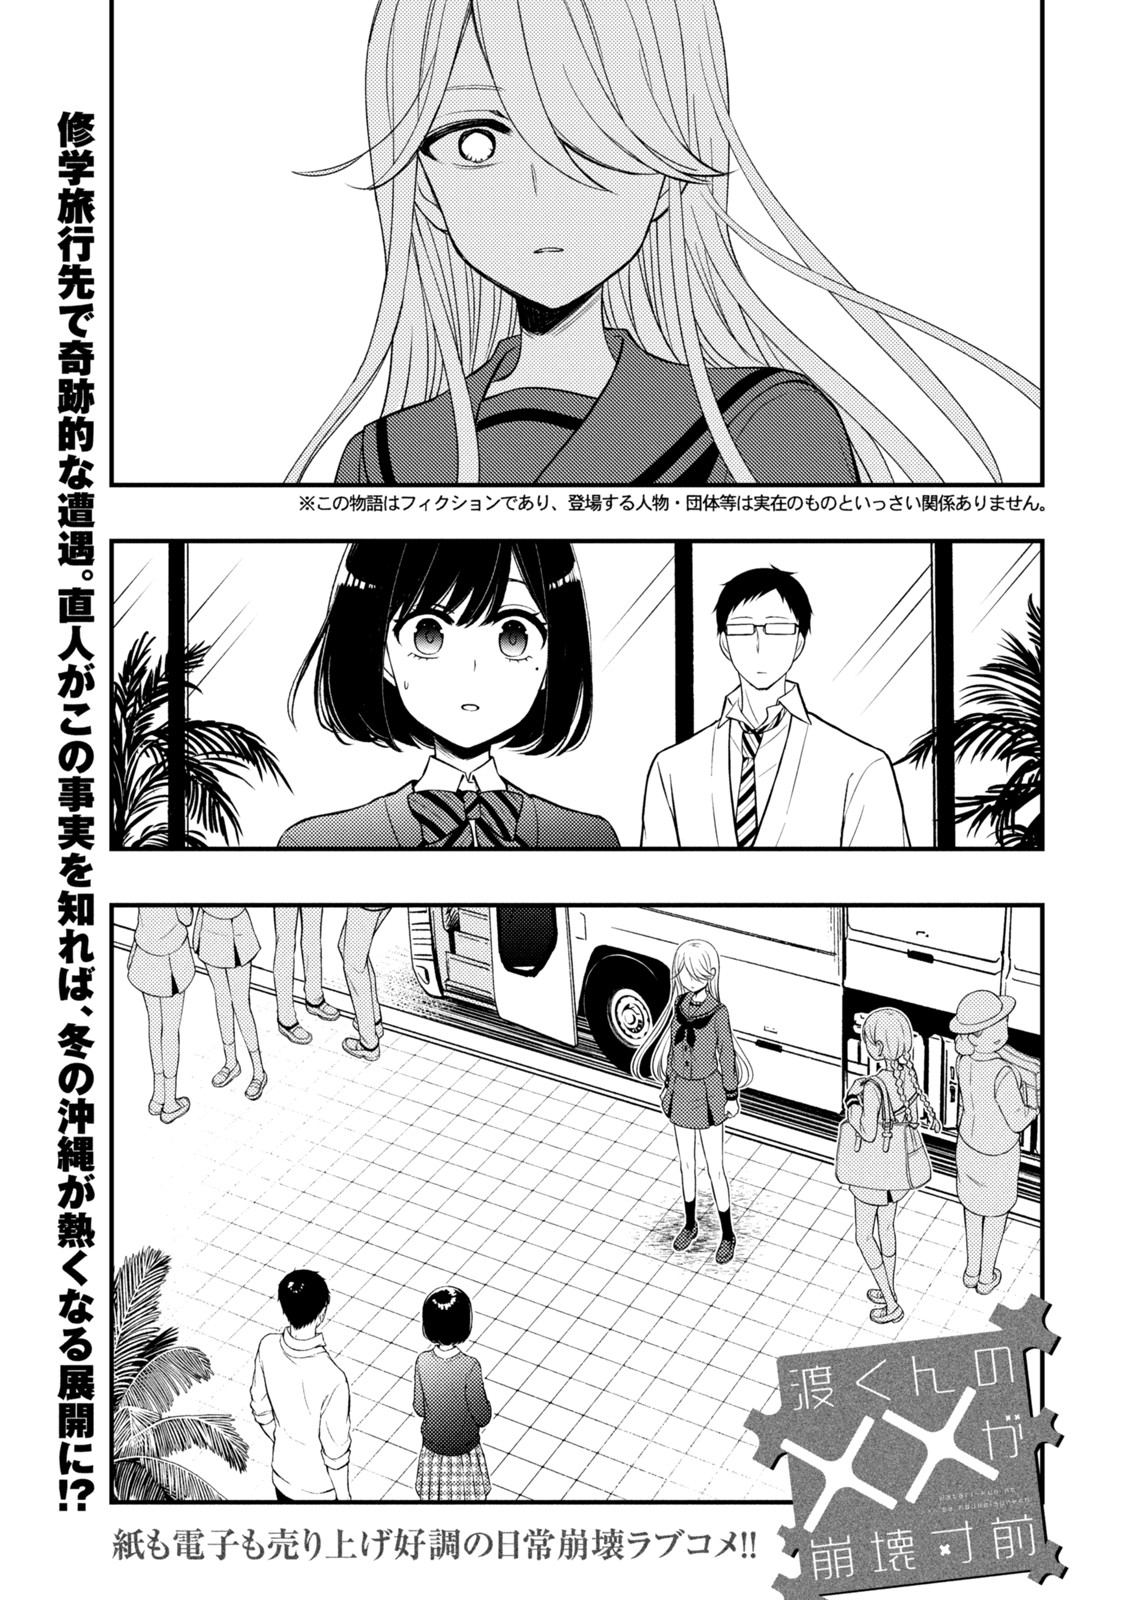 Watari-kun no xx ga Houkai Sunzen - Chapter 69 - Page 1